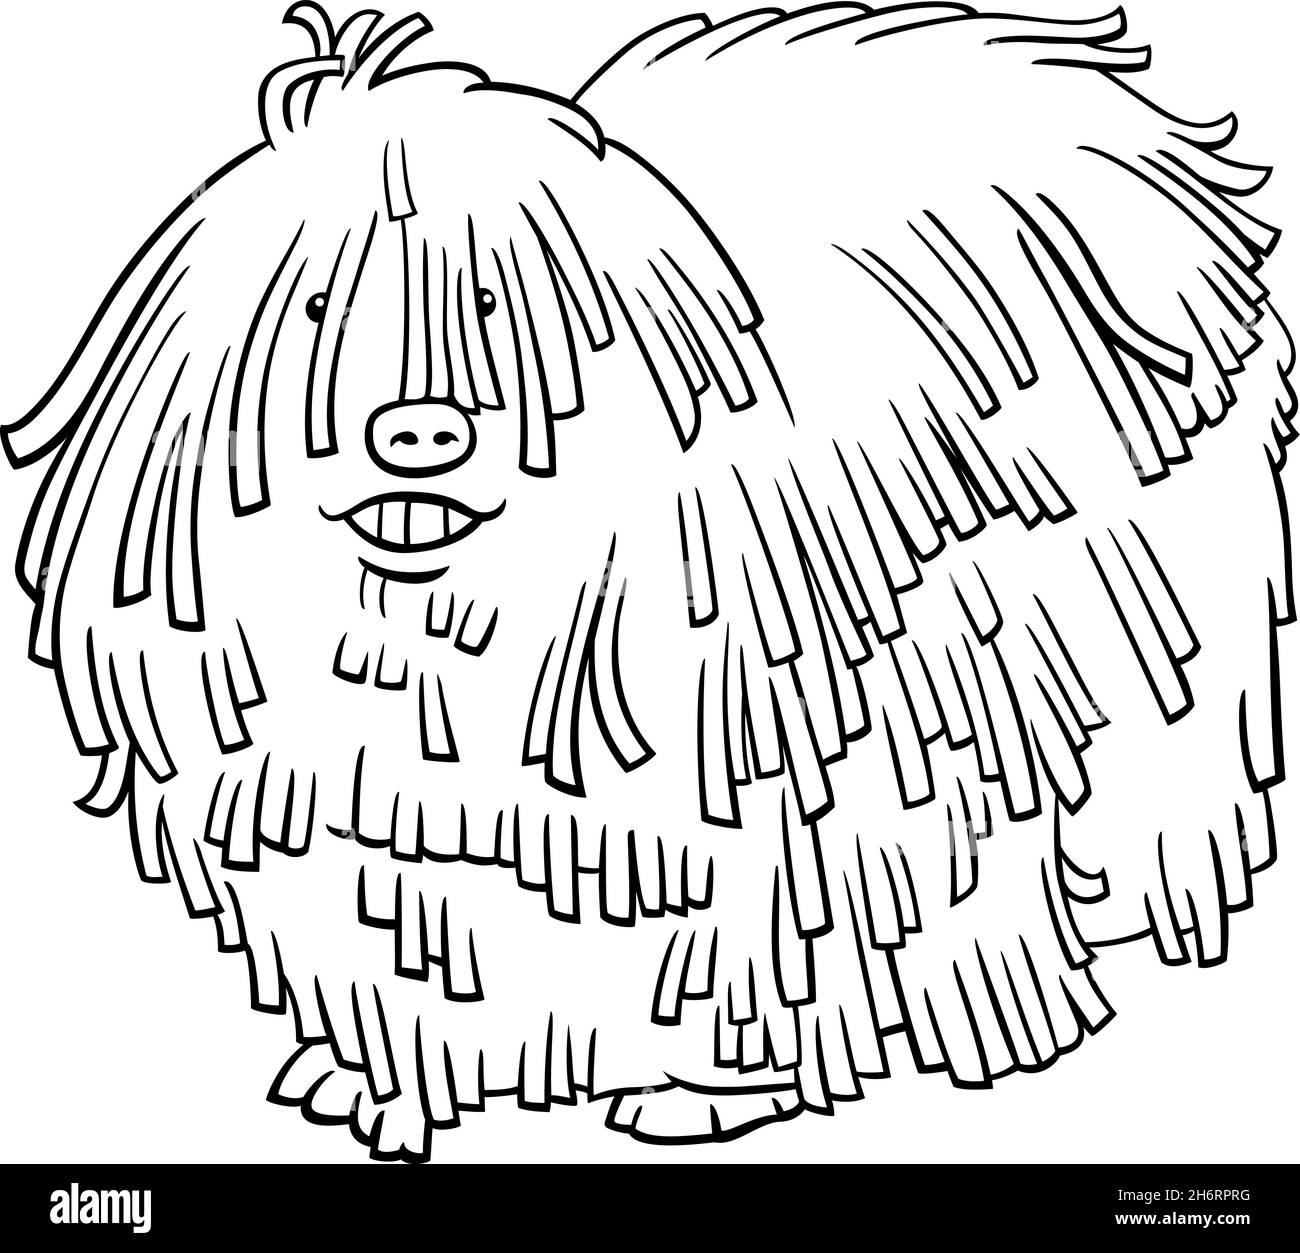 Black and white cartoon illustration of komondor or Hungarian sheepdog purebred dog animal character coloring book page Stock Vector